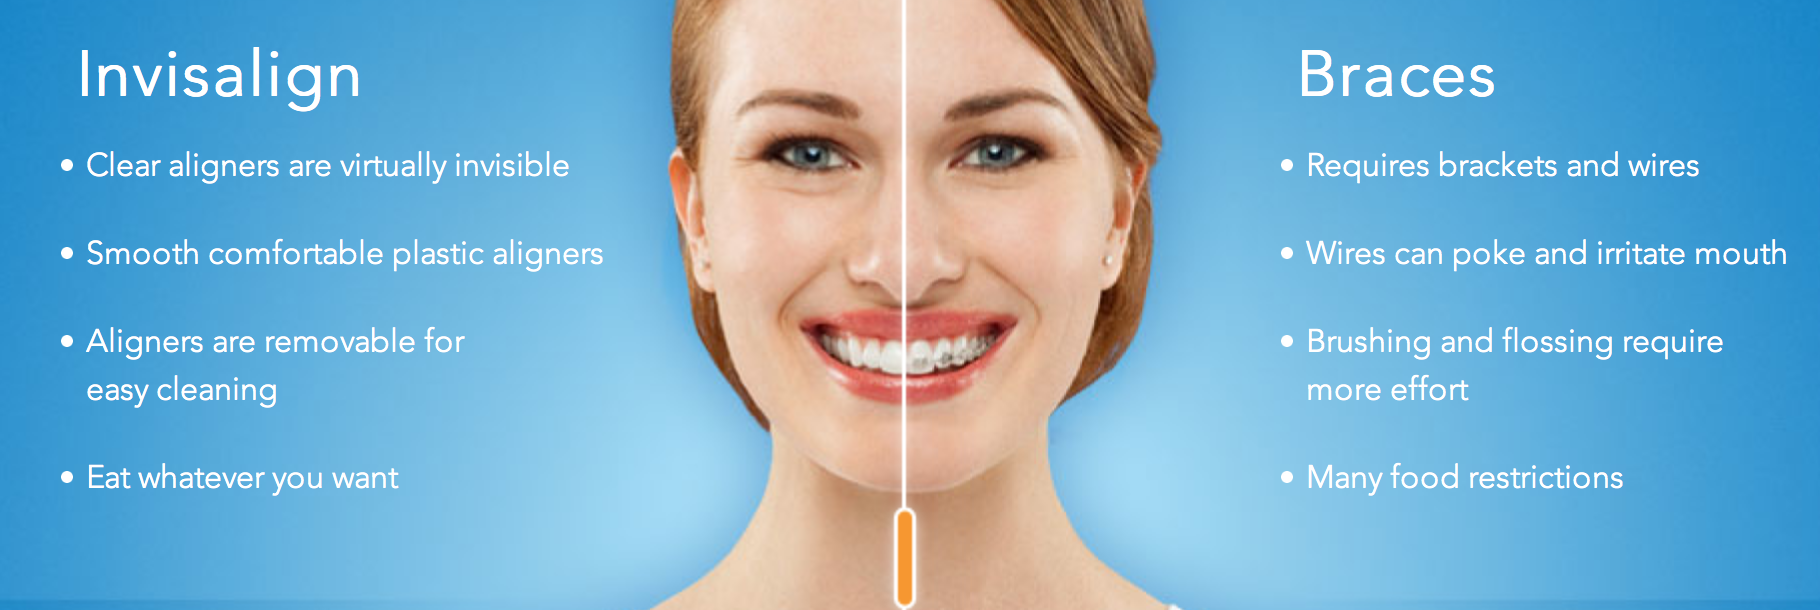 invisalign-your-secret-to-straight-teeth